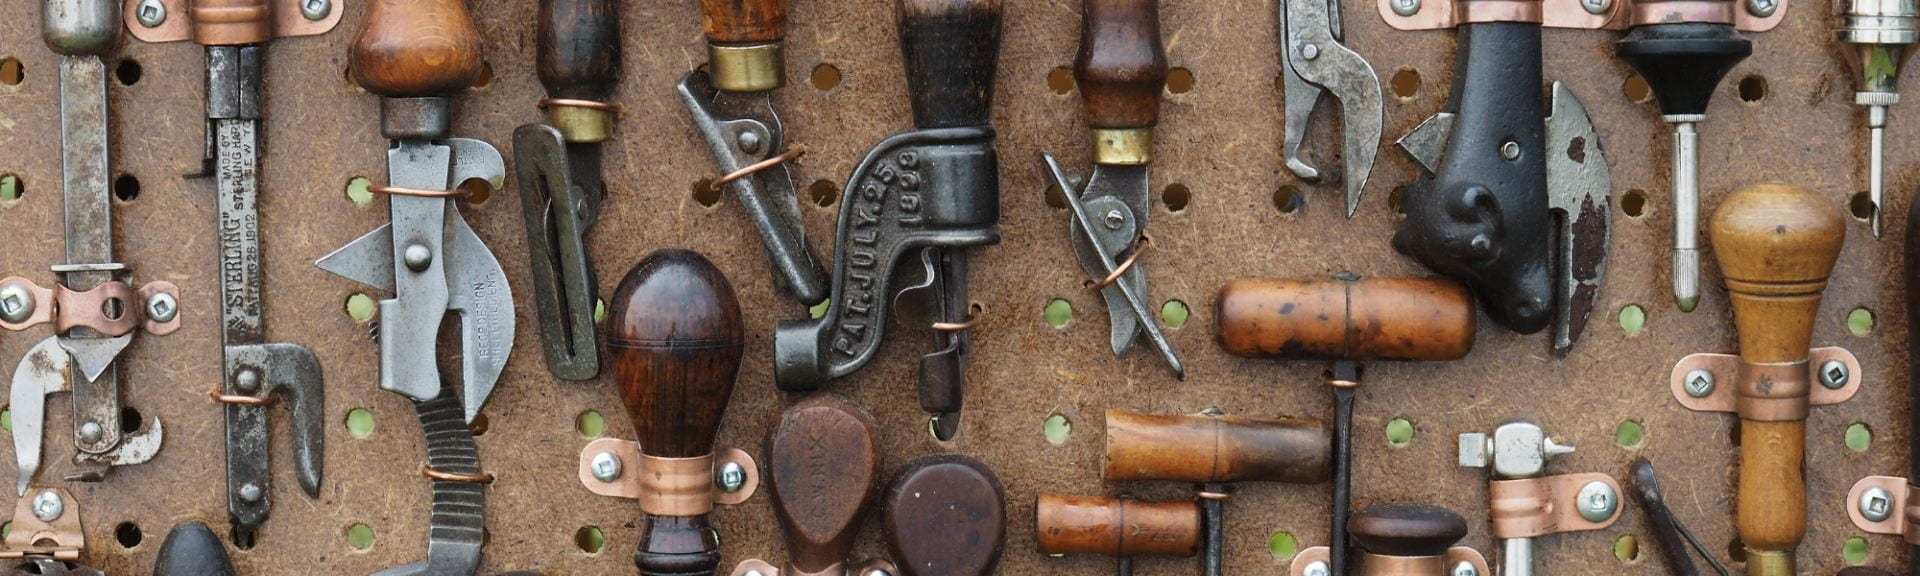 Decorative image of tools